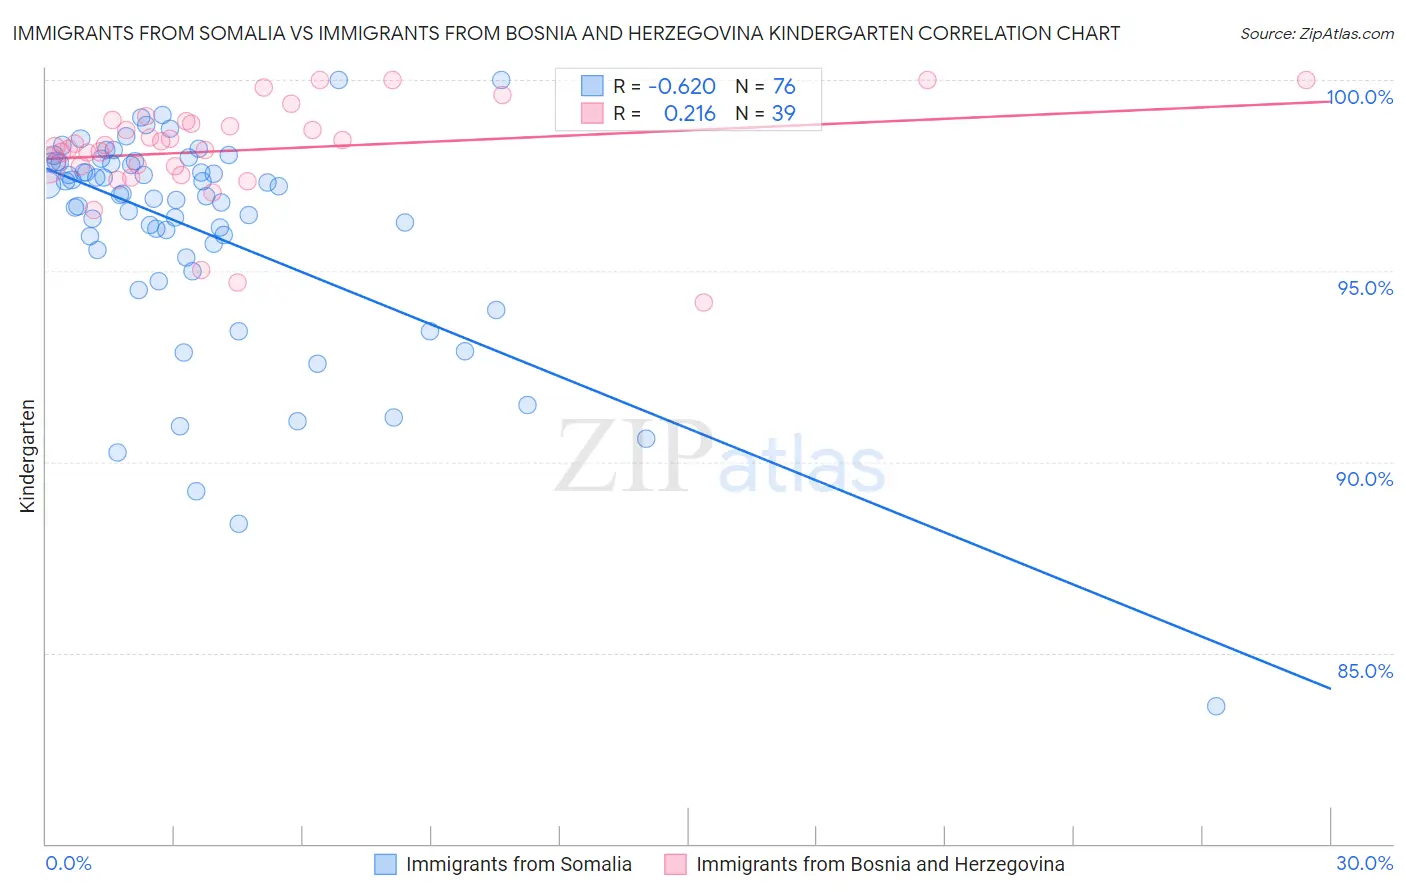 Immigrants from Somalia vs Immigrants from Bosnia and Herzegovina Kindergarten